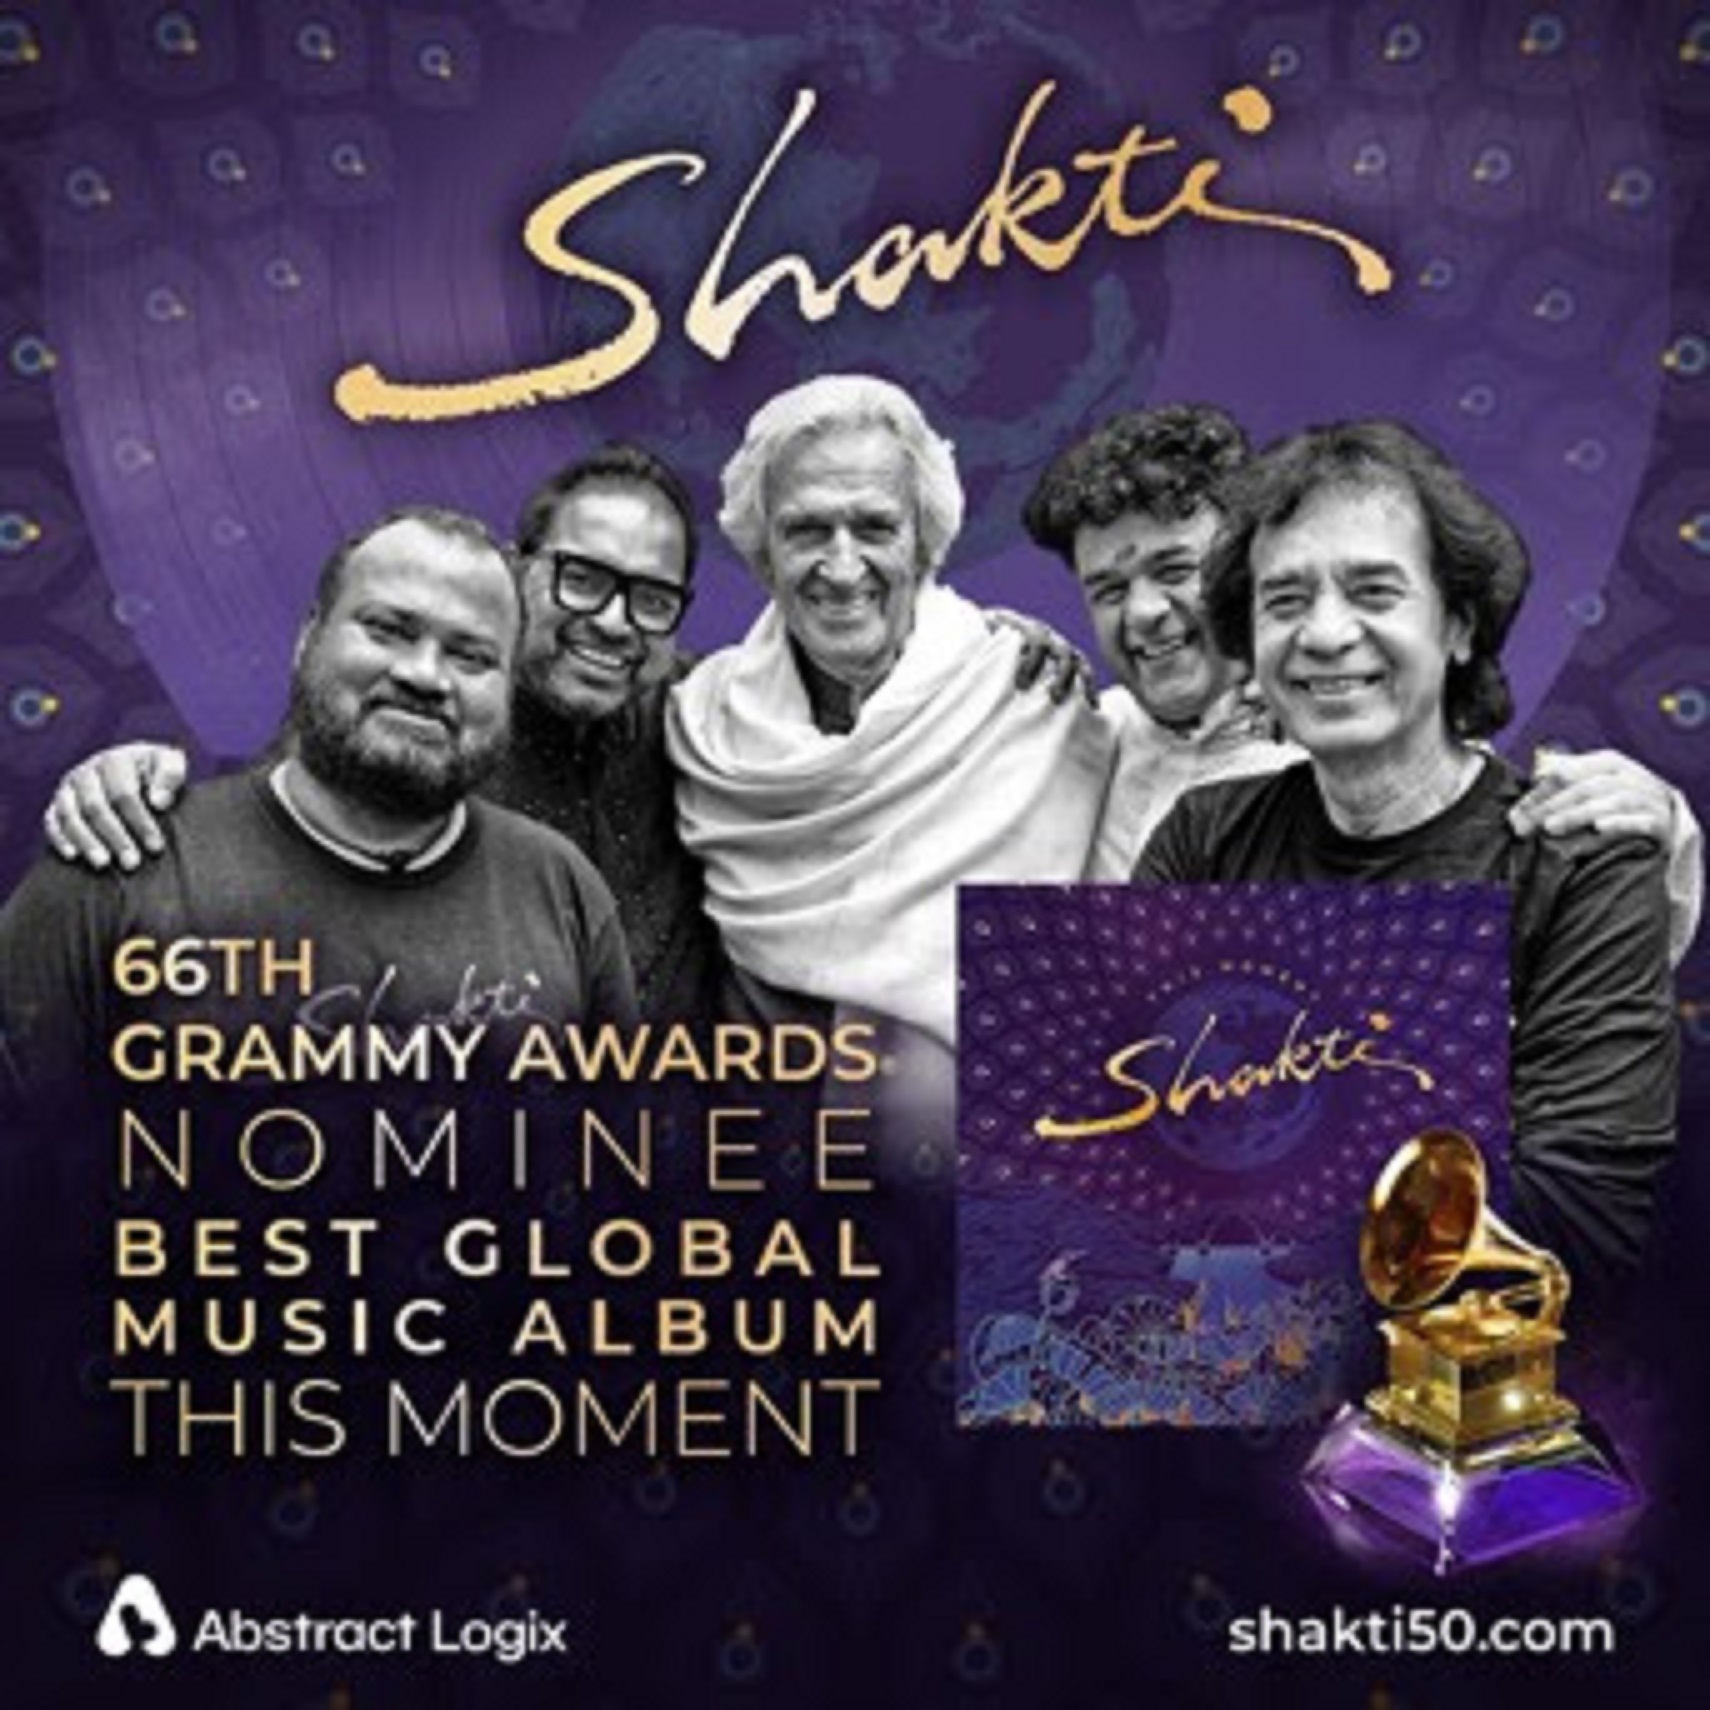 John McLaughlin & Zakir Hussain - World Music Trailblazers - Celebrate SHAKTI's 50th Anniversary and Grammy Nomination!